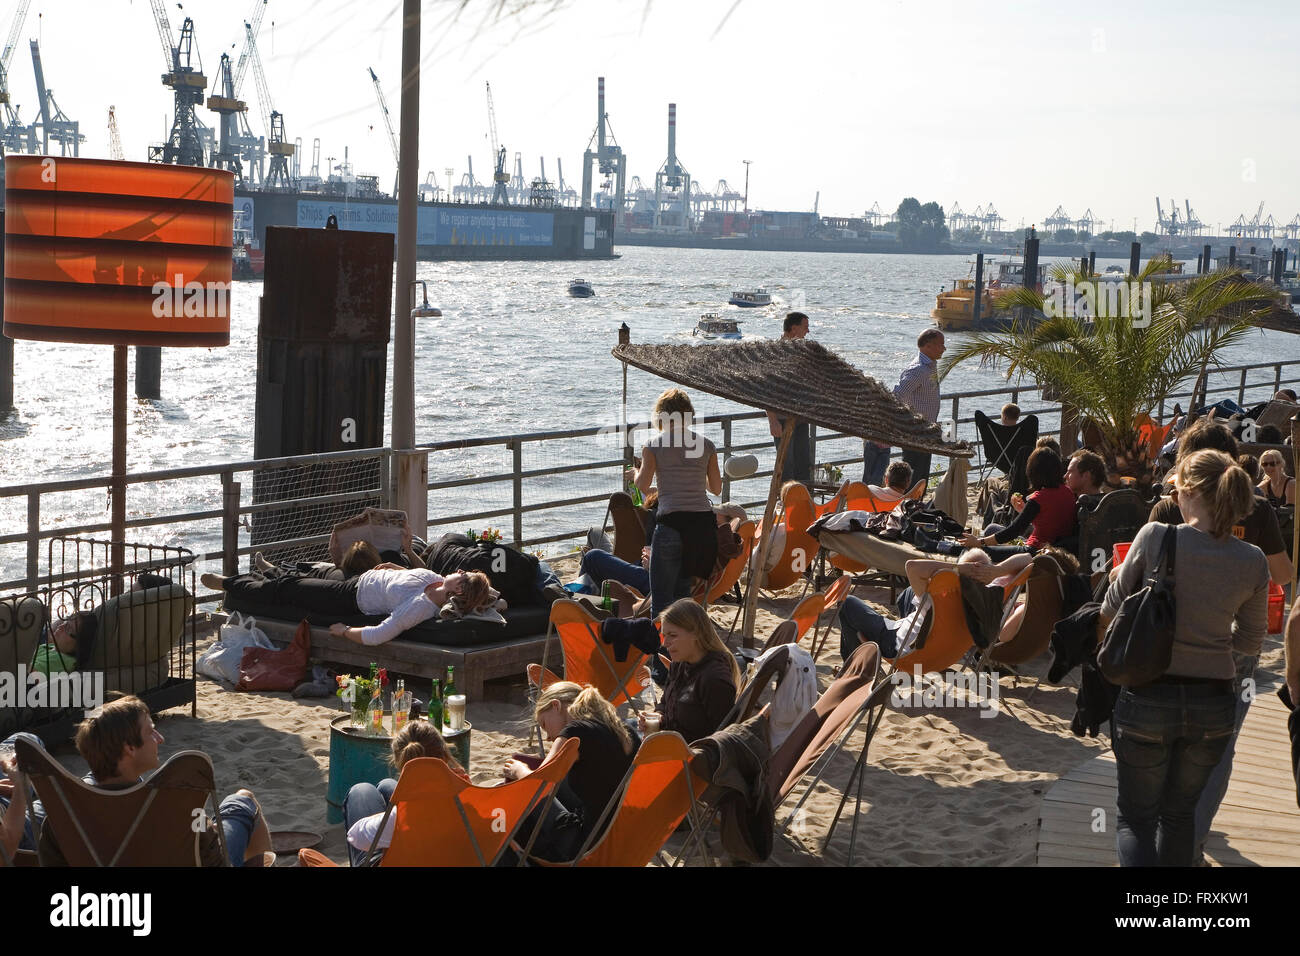 Strand von Pauli, Beachclub, Hafen, Elbe, St. Pauli, Hamburg, Deutschland Stockfoto